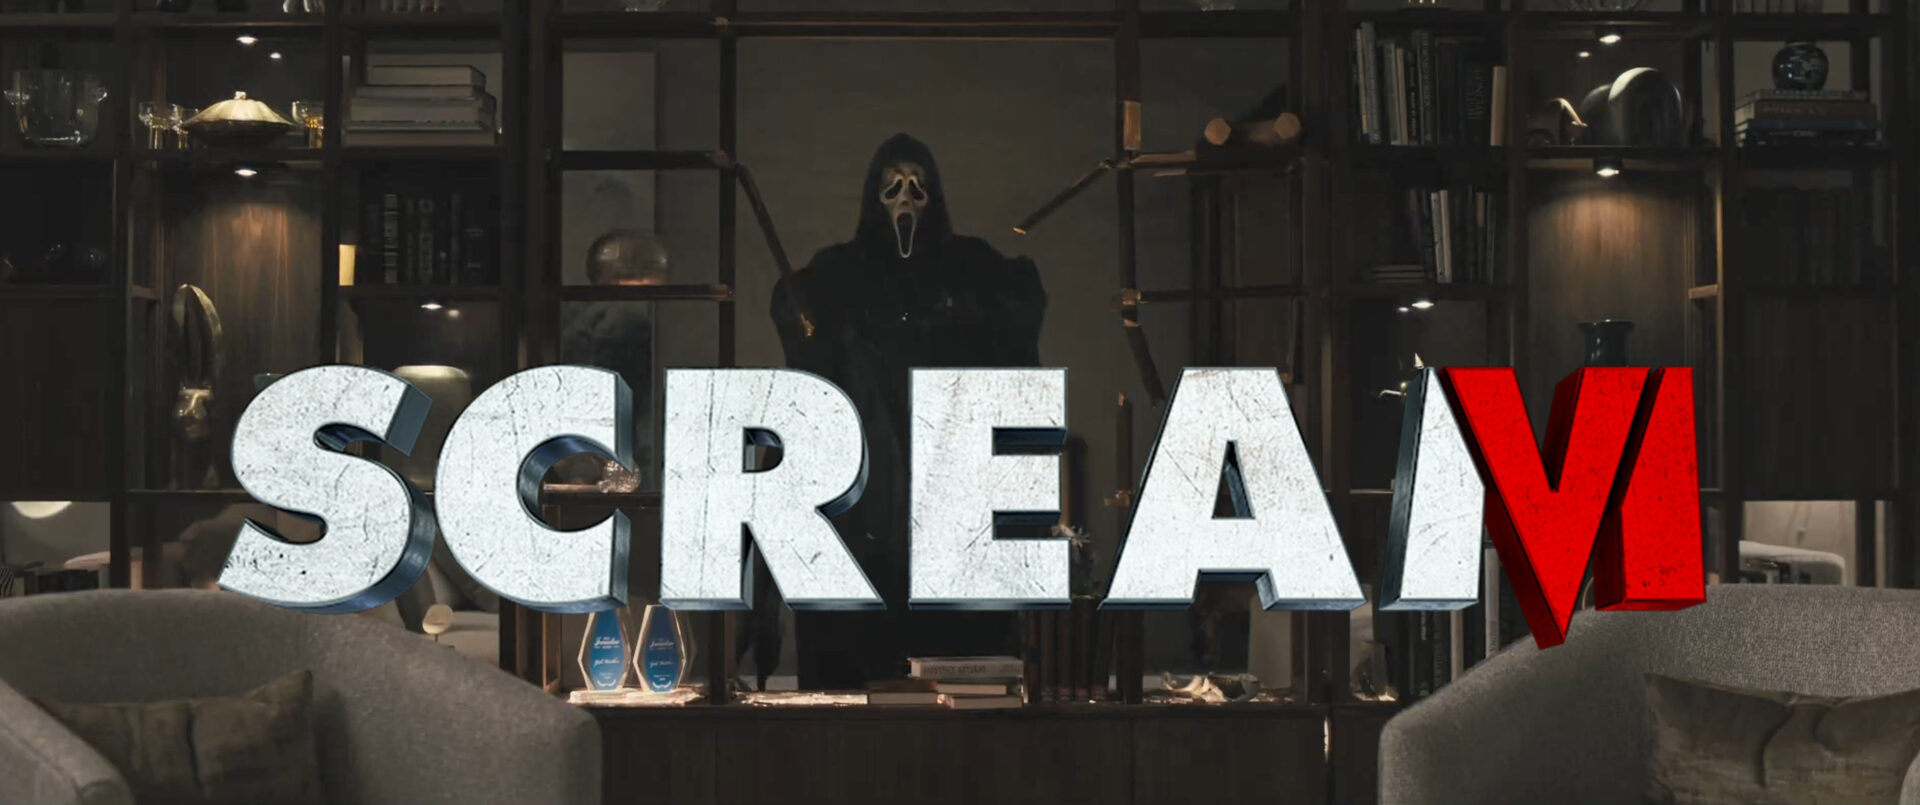 scream 6 theatrical trailer banner1